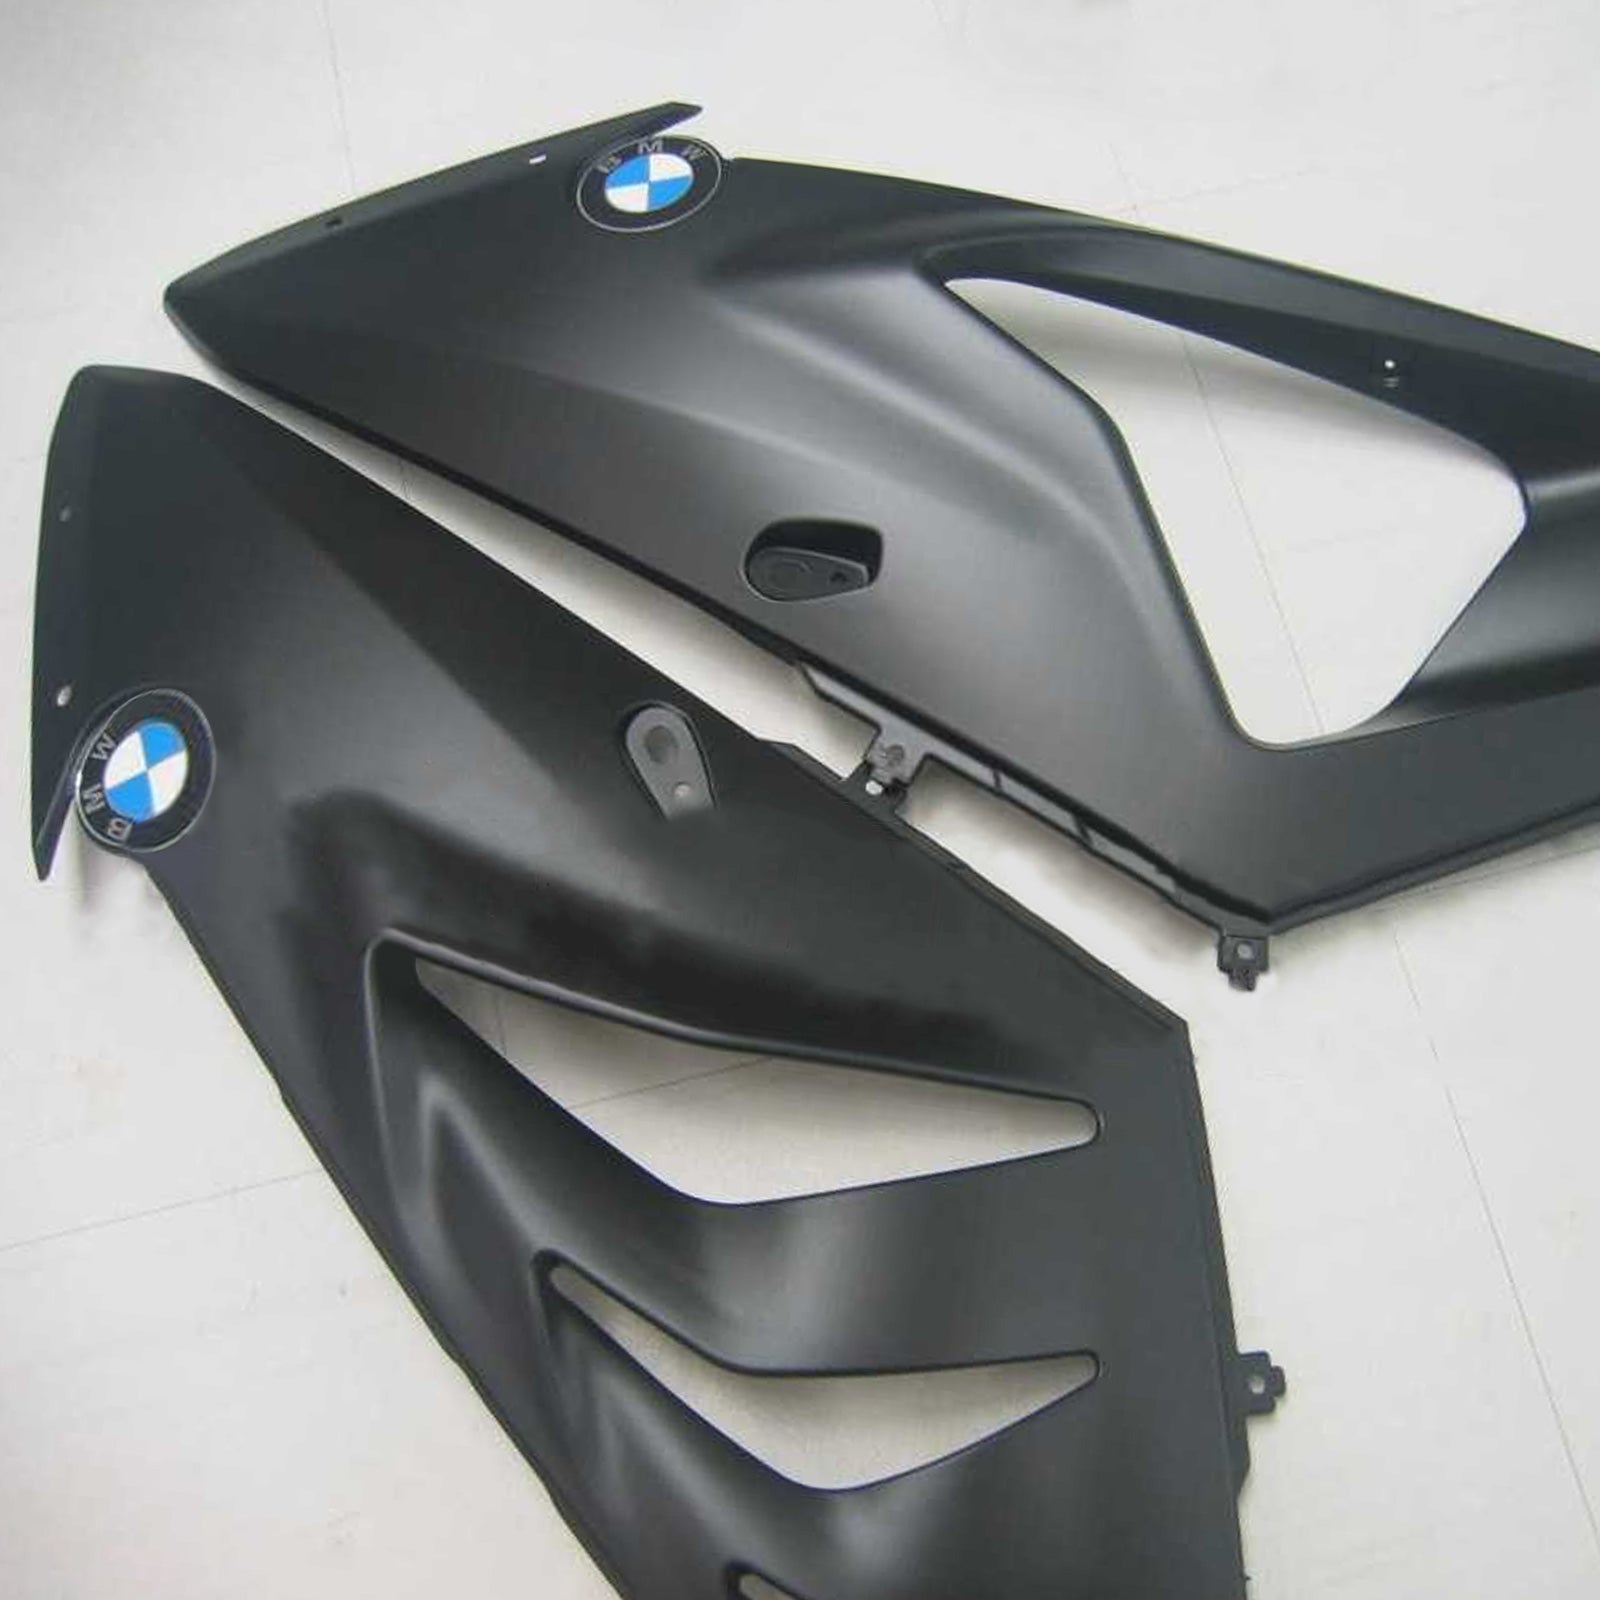 Amotopart Kit Carena per BMW S1000RR 2009-2014 Carrozzeria plastica ABS generica